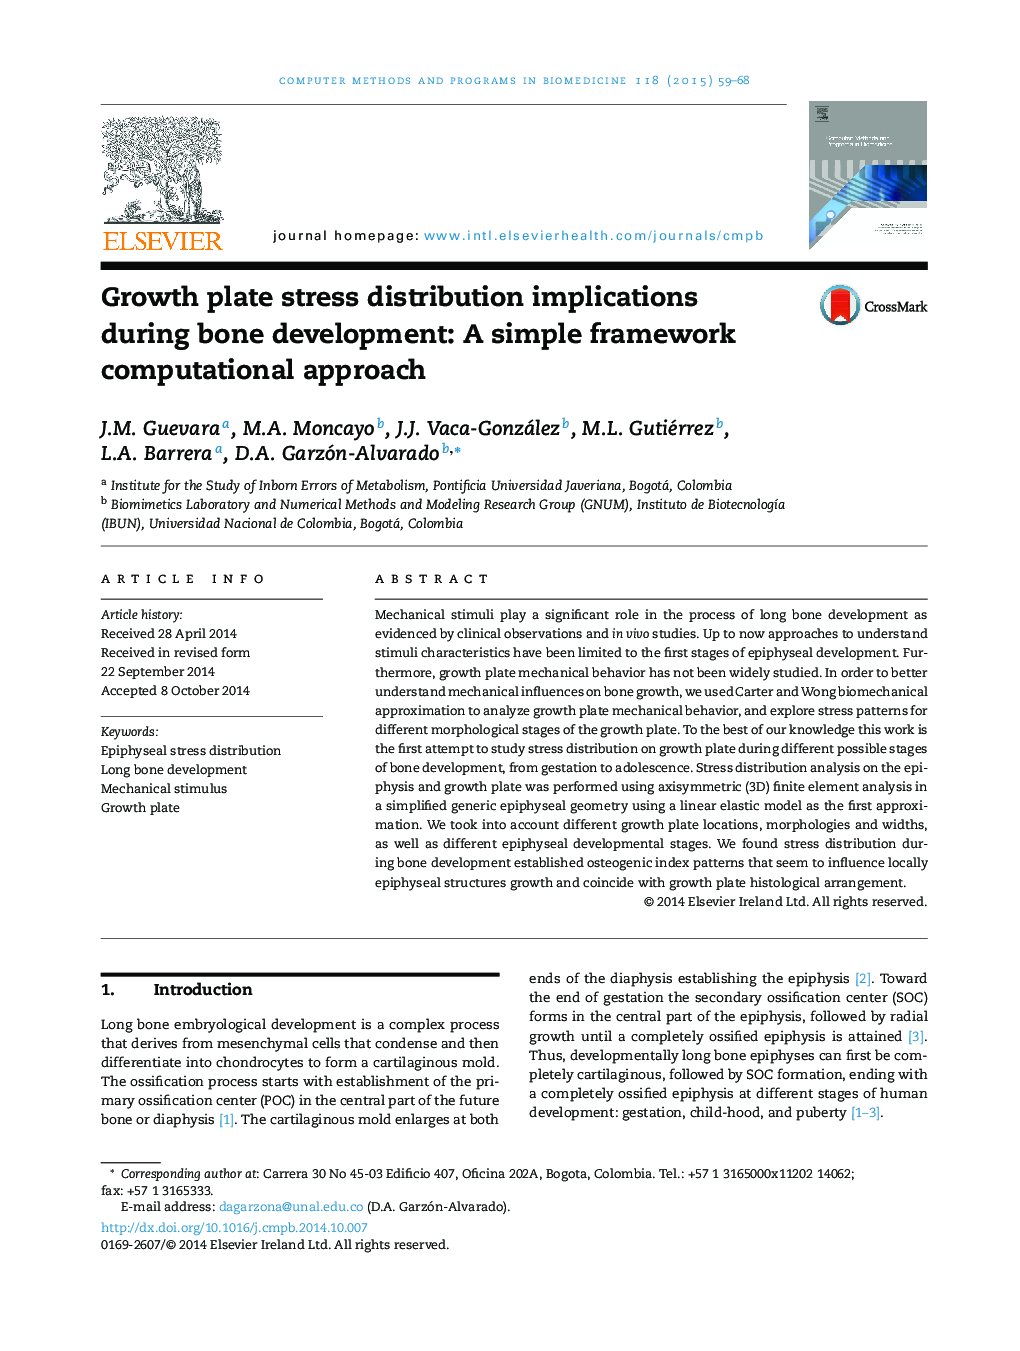 Growth plate stress distribution implications during bone development: A simple framework computational approach